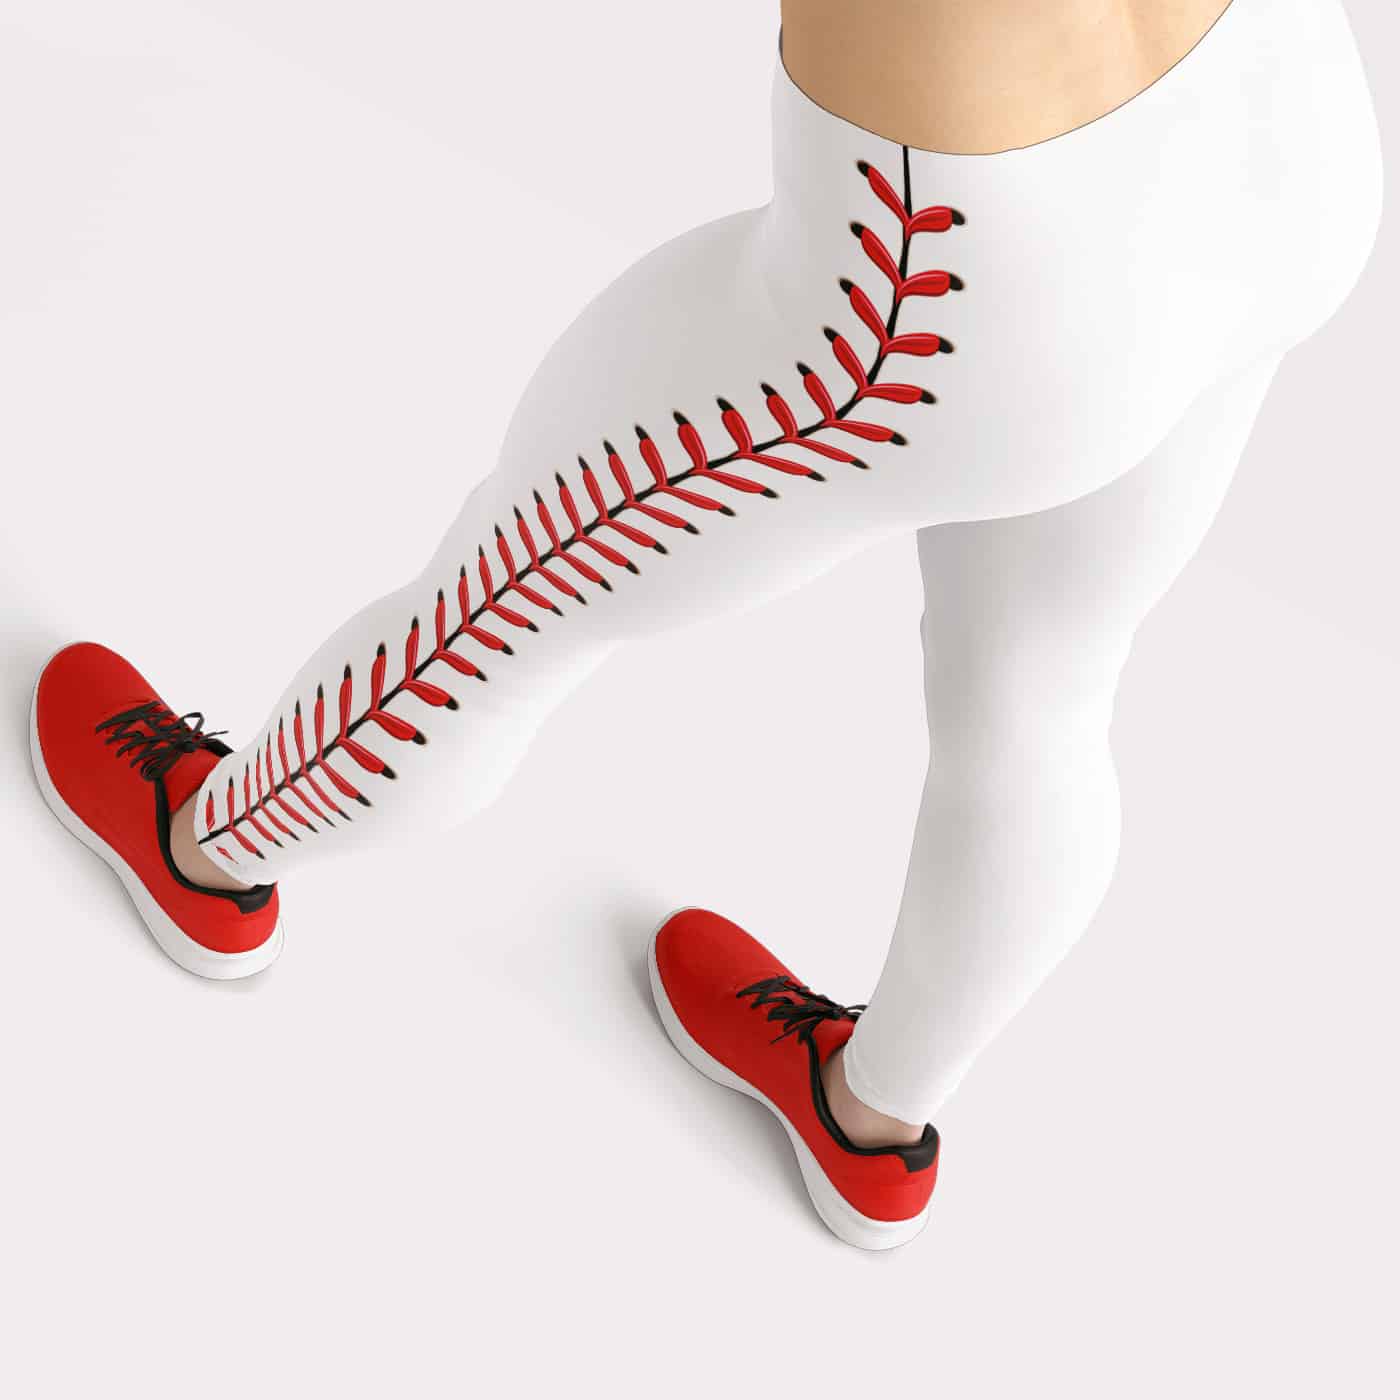 https://squeakychimp.com/wp-content/uploads/2020/01/baseball-leggings-ball-stitches-stripes-1400x1400-1400x1400.jpg